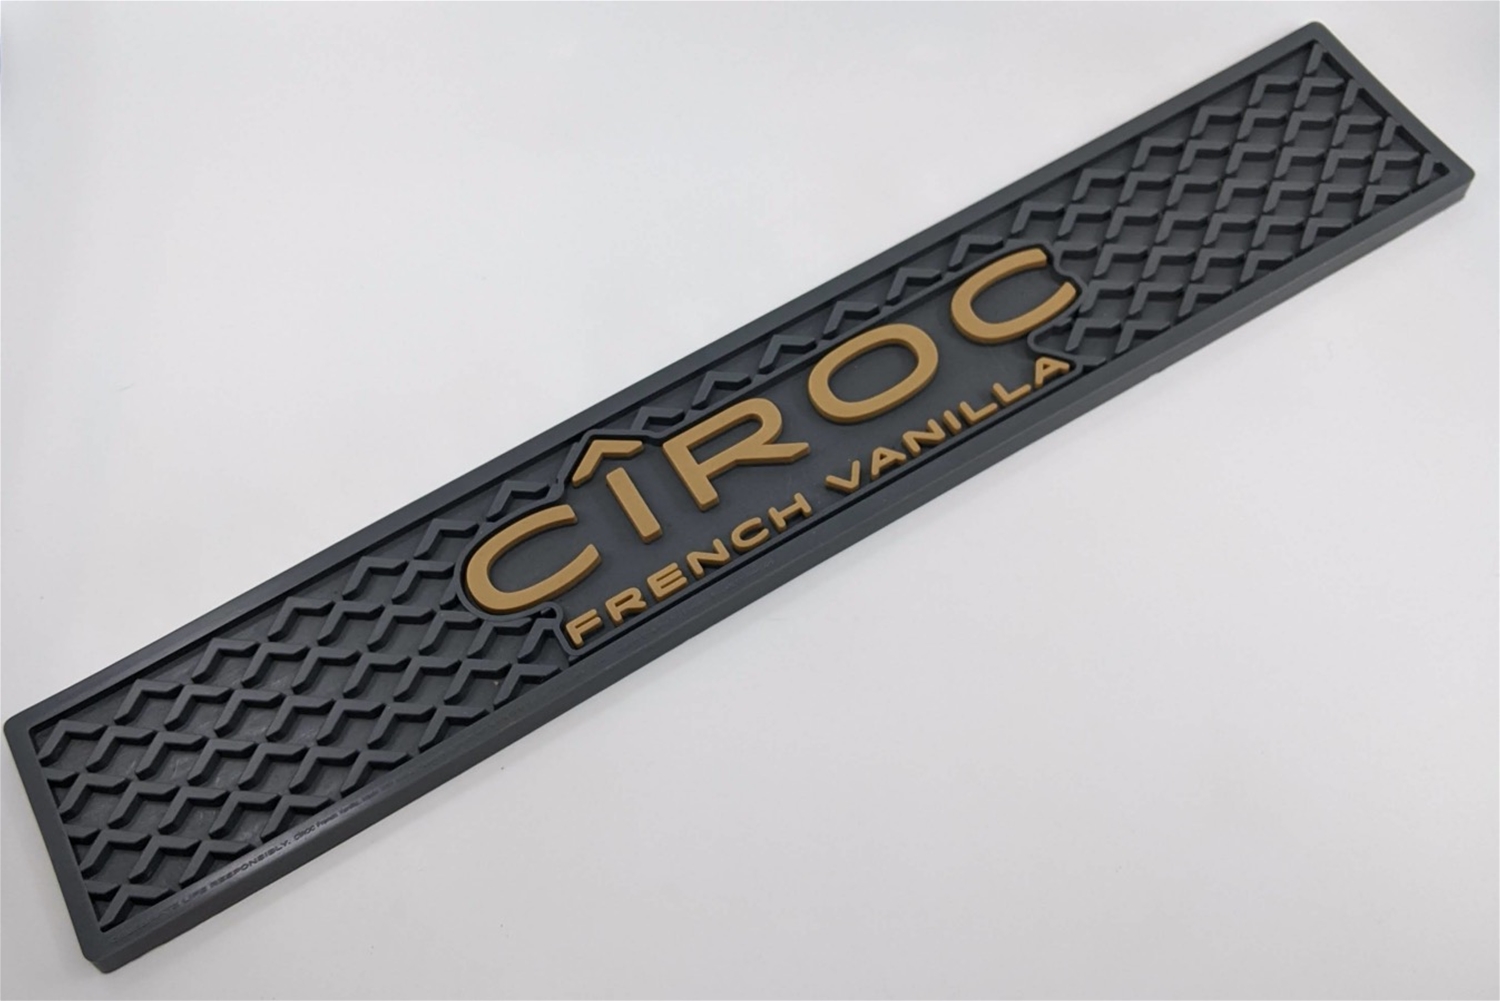 Ciroc French Vanilla Drink Spill Mat